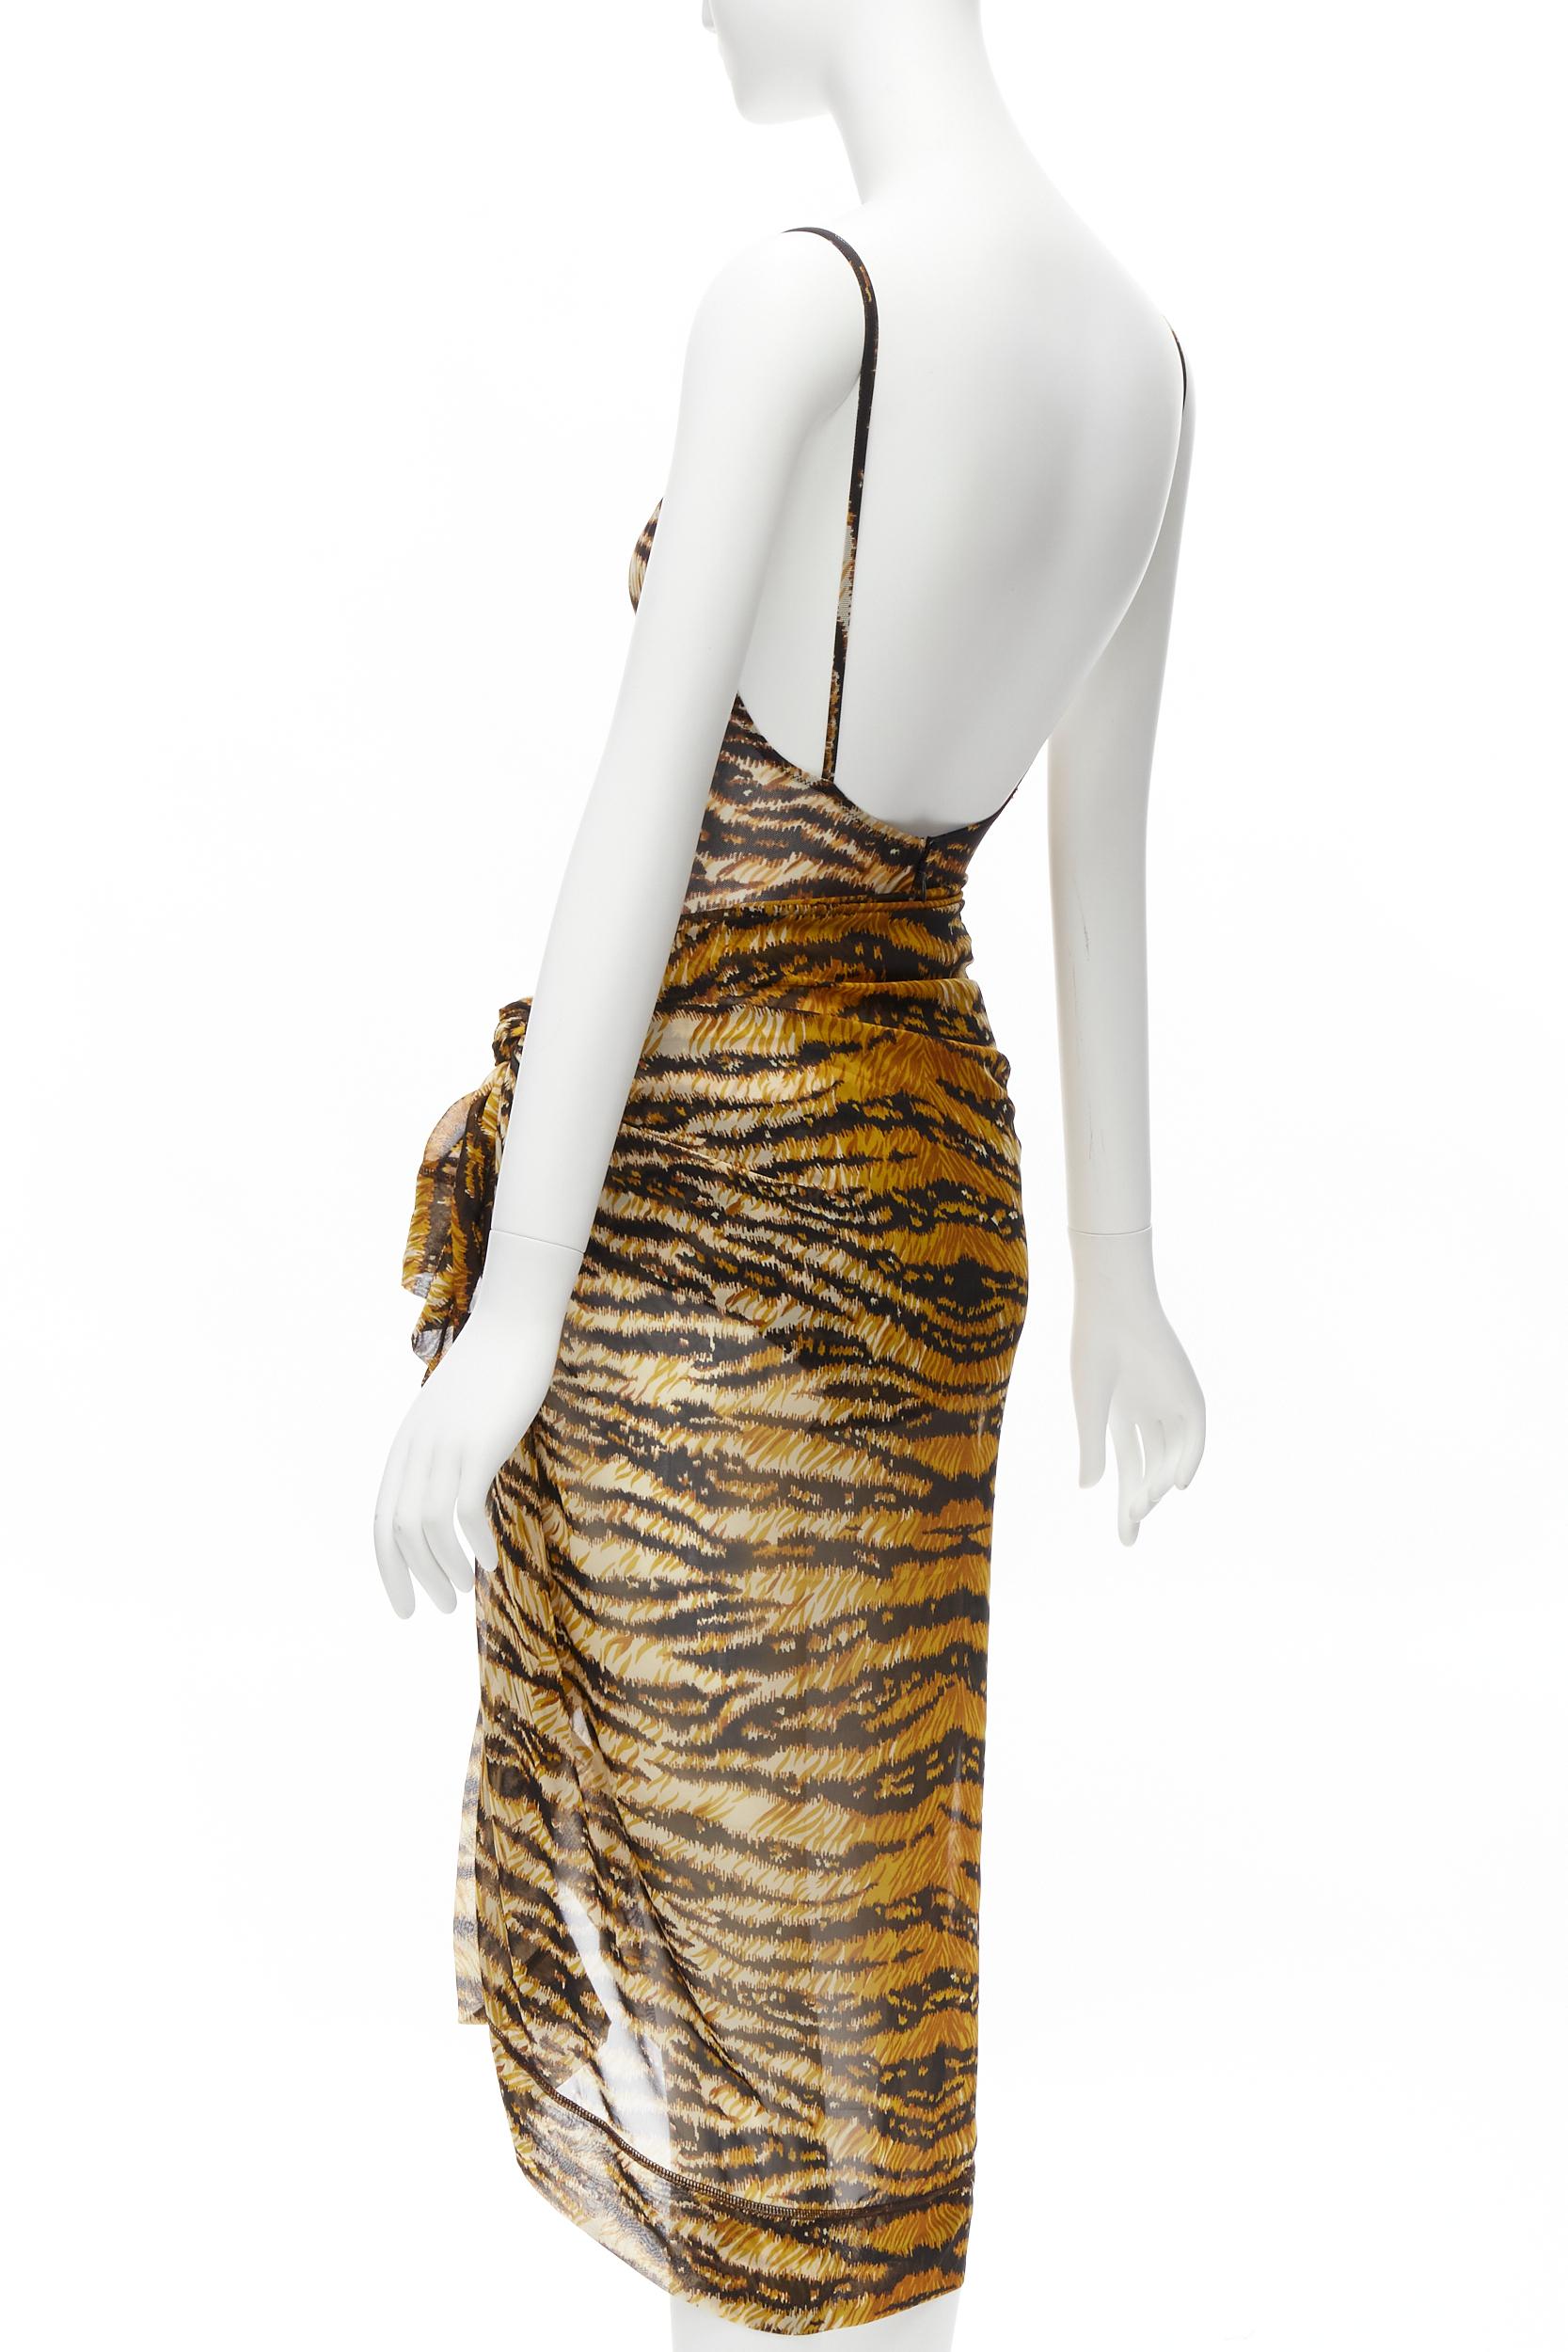 DOLCE GABBANA MARE Vintage tiger print mesh bustier bodysuit wrap skirt scarf S 8